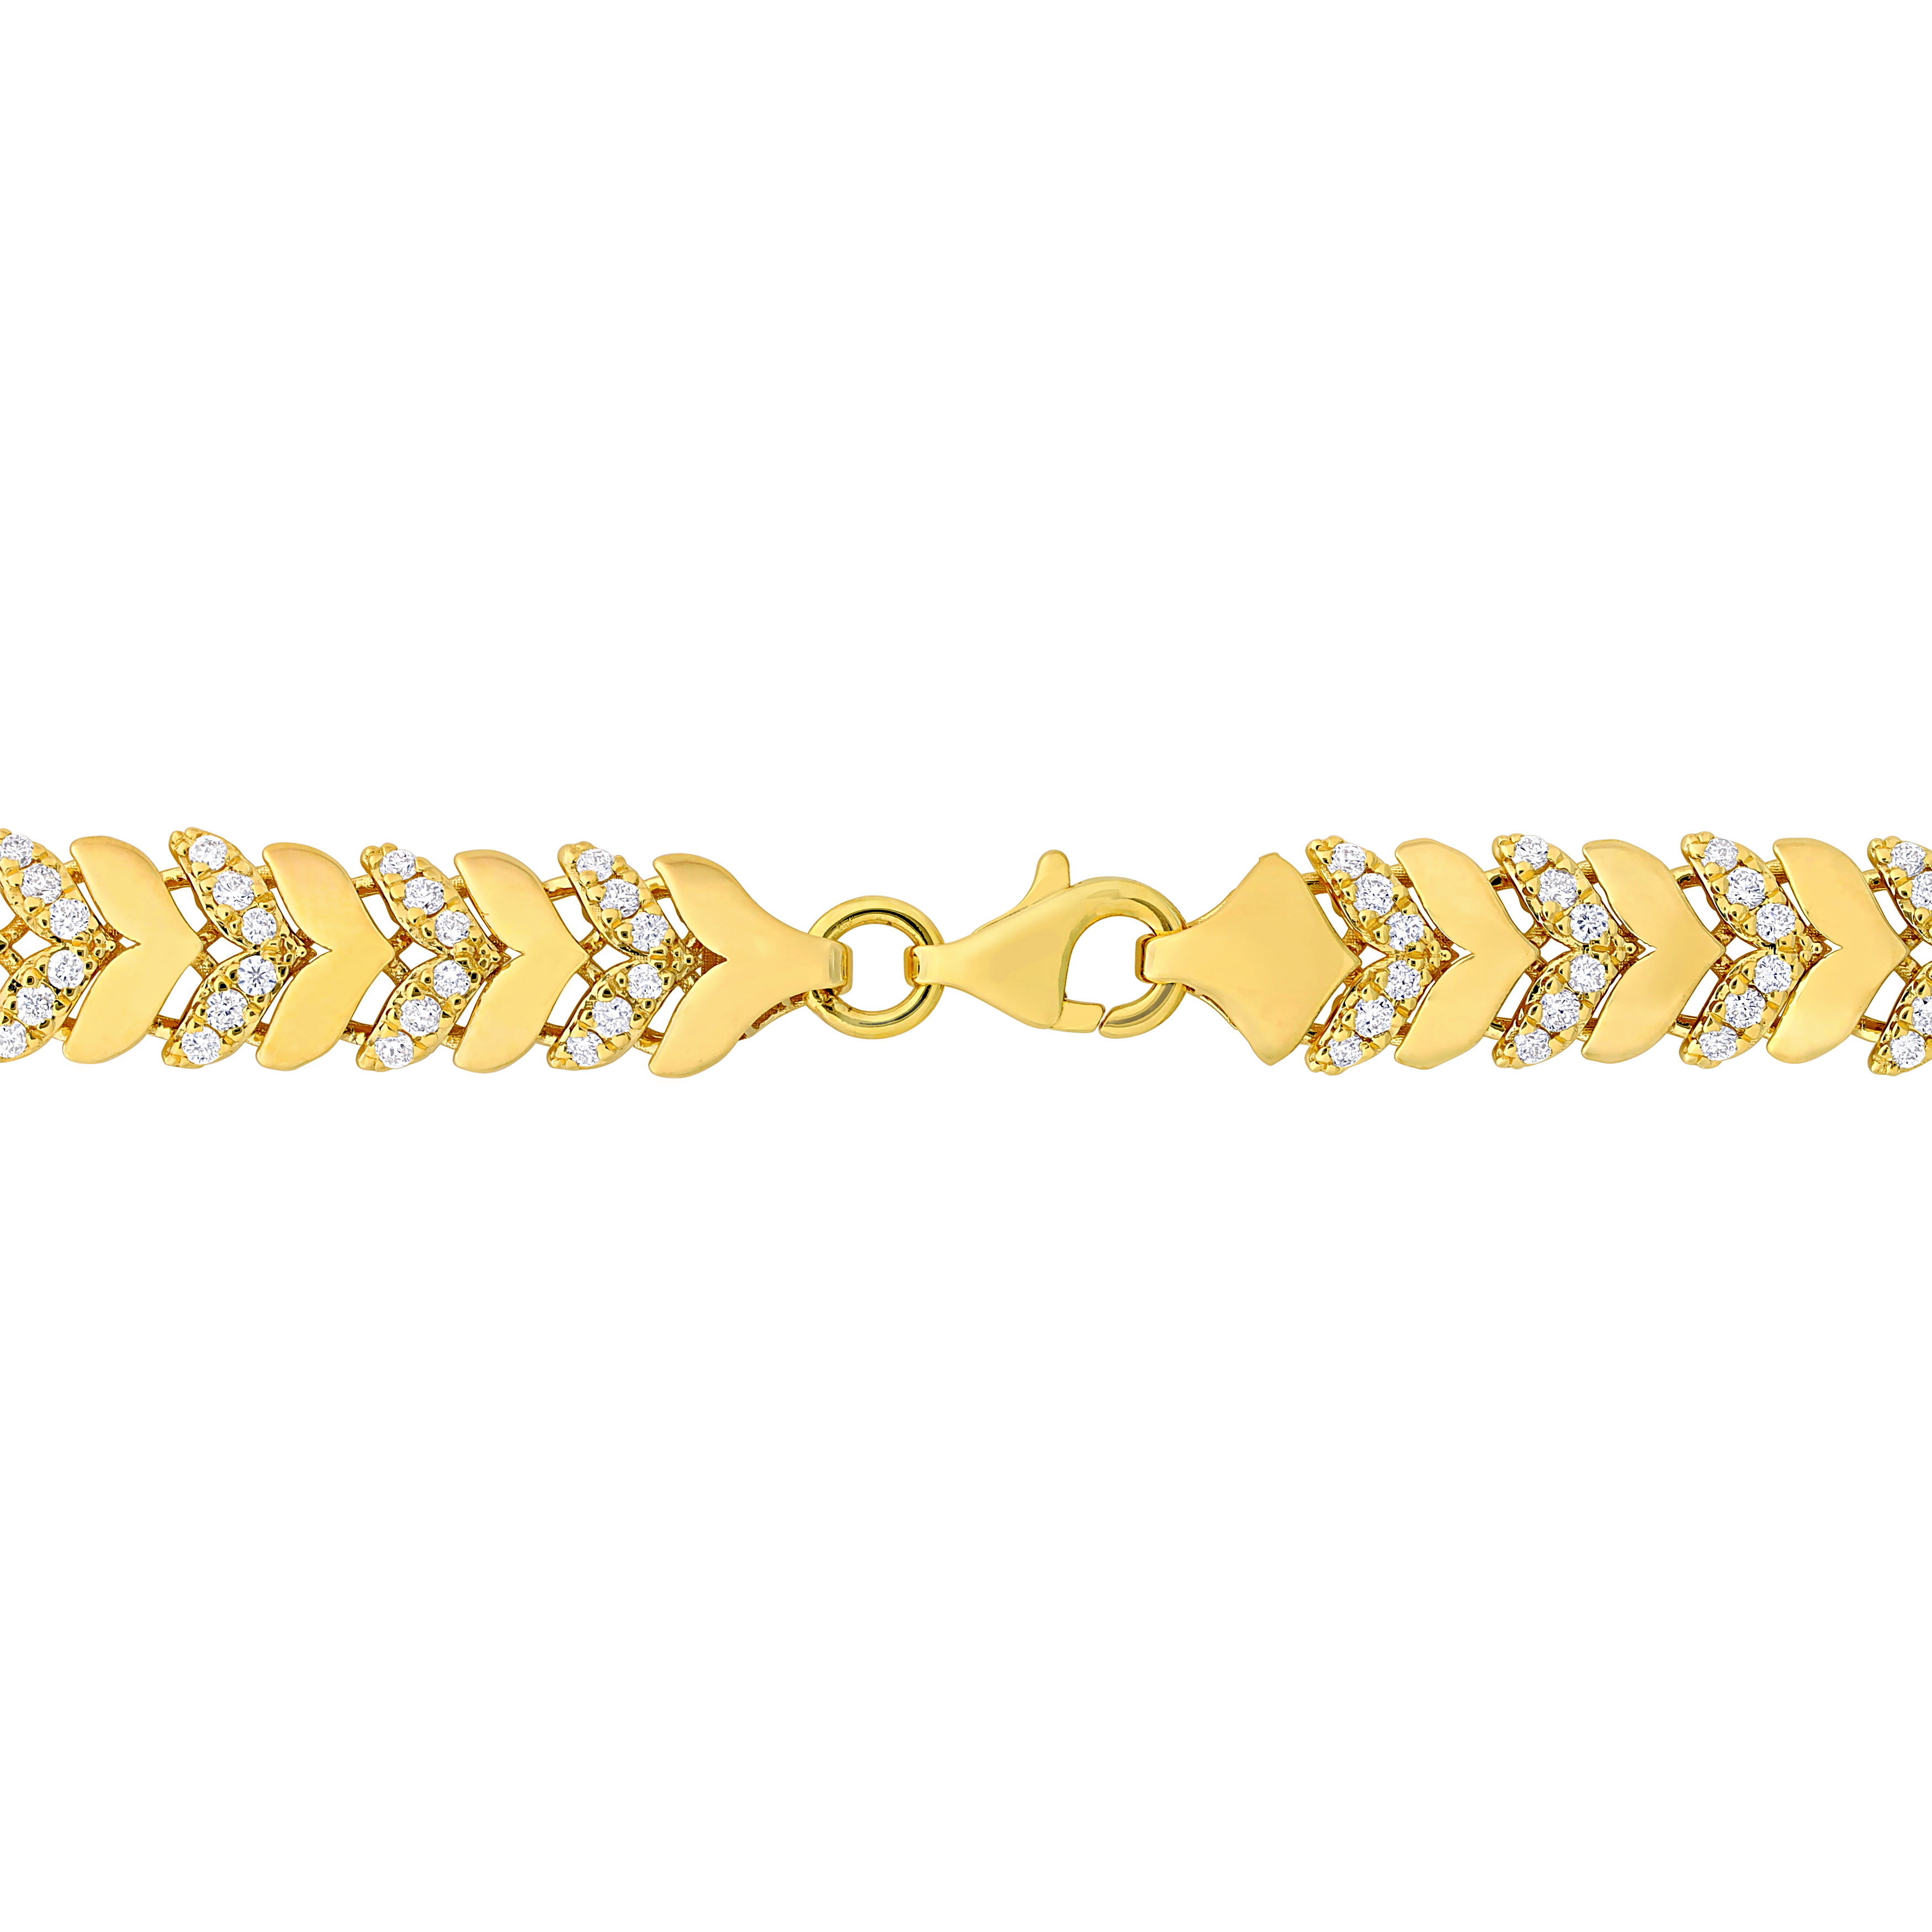 1 1/3 CT TDW Diamond Leaf Tennis Bracelet in 14k Yellow Gold - 7.5 in.